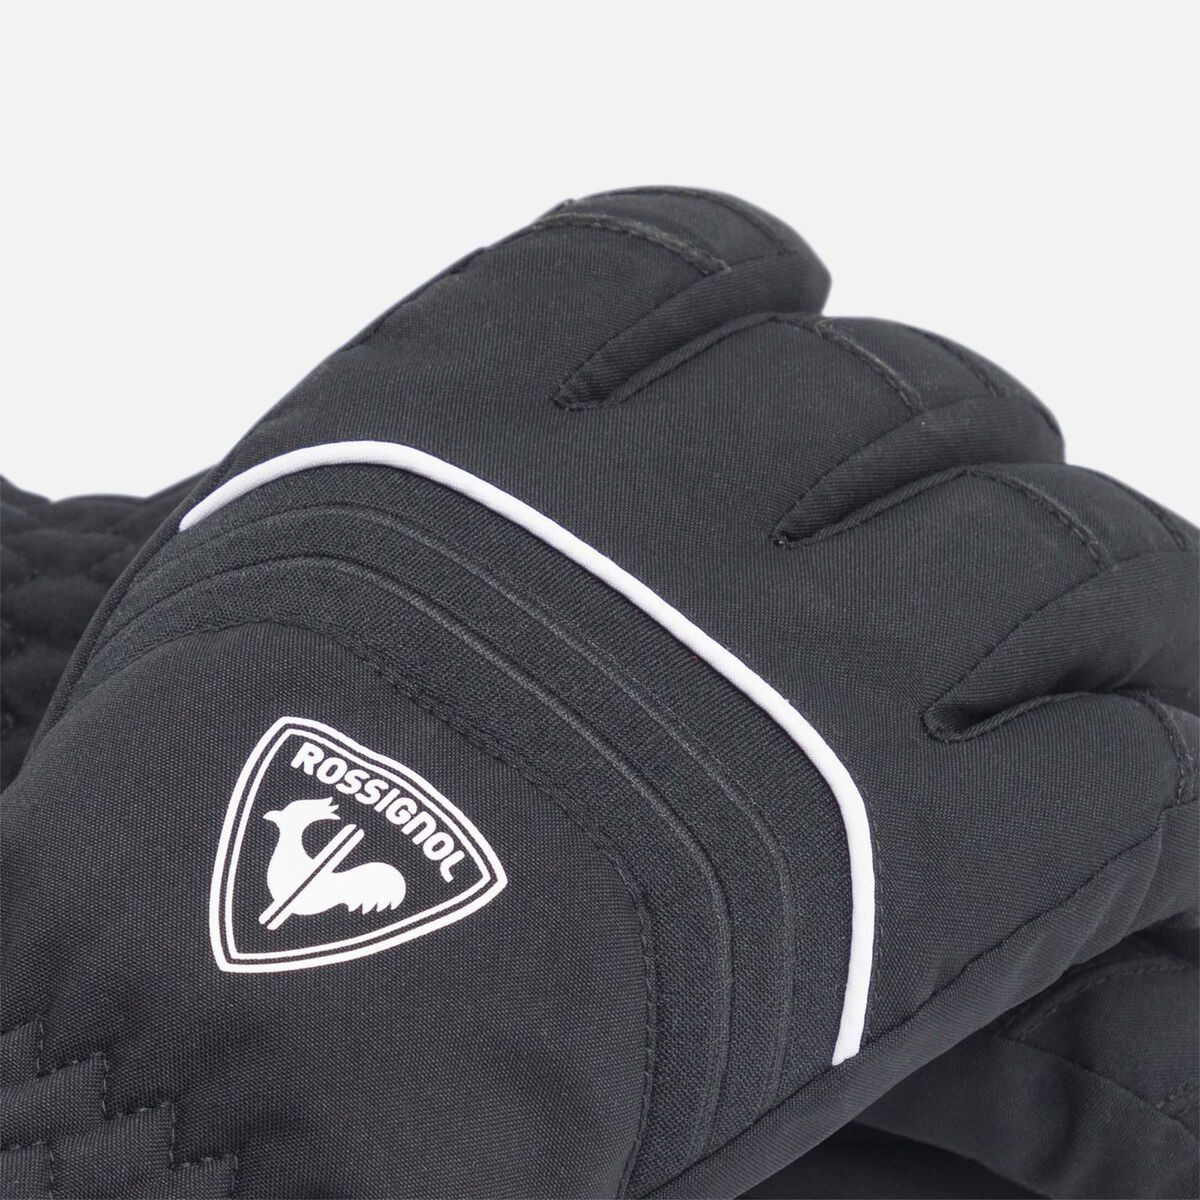 Rossignol Juniors' Tech Ski Gloves Black